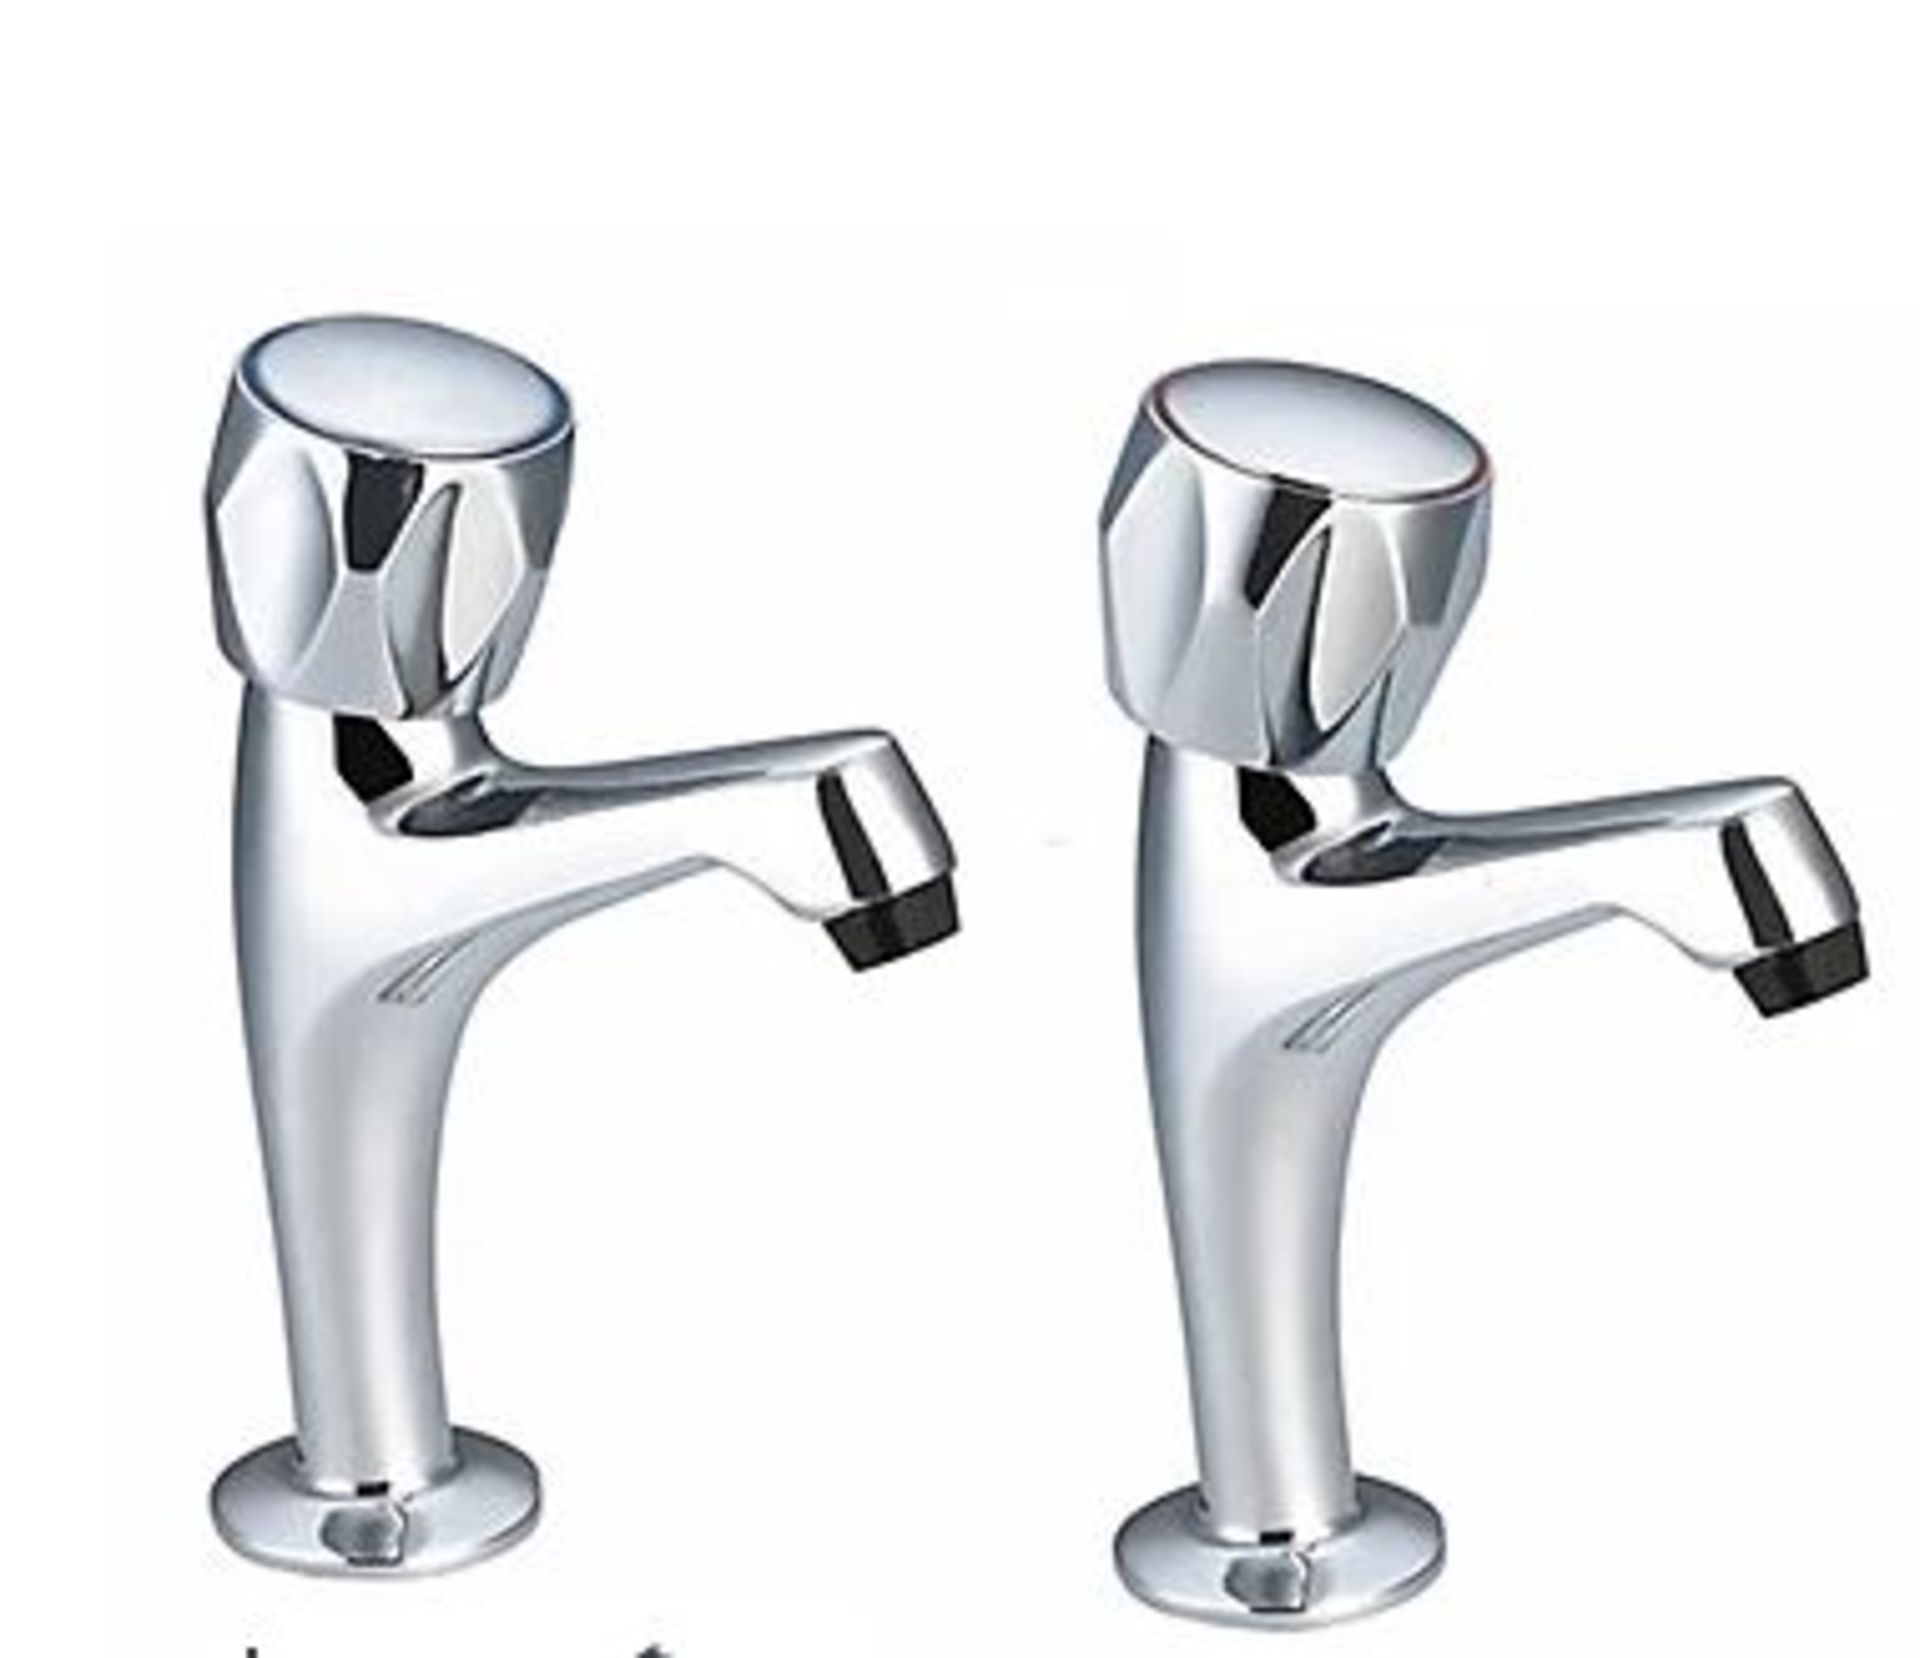 5 x Pro Tap Classic Kitchen Sink Pillar Taps 298615CP - Chrome Plated